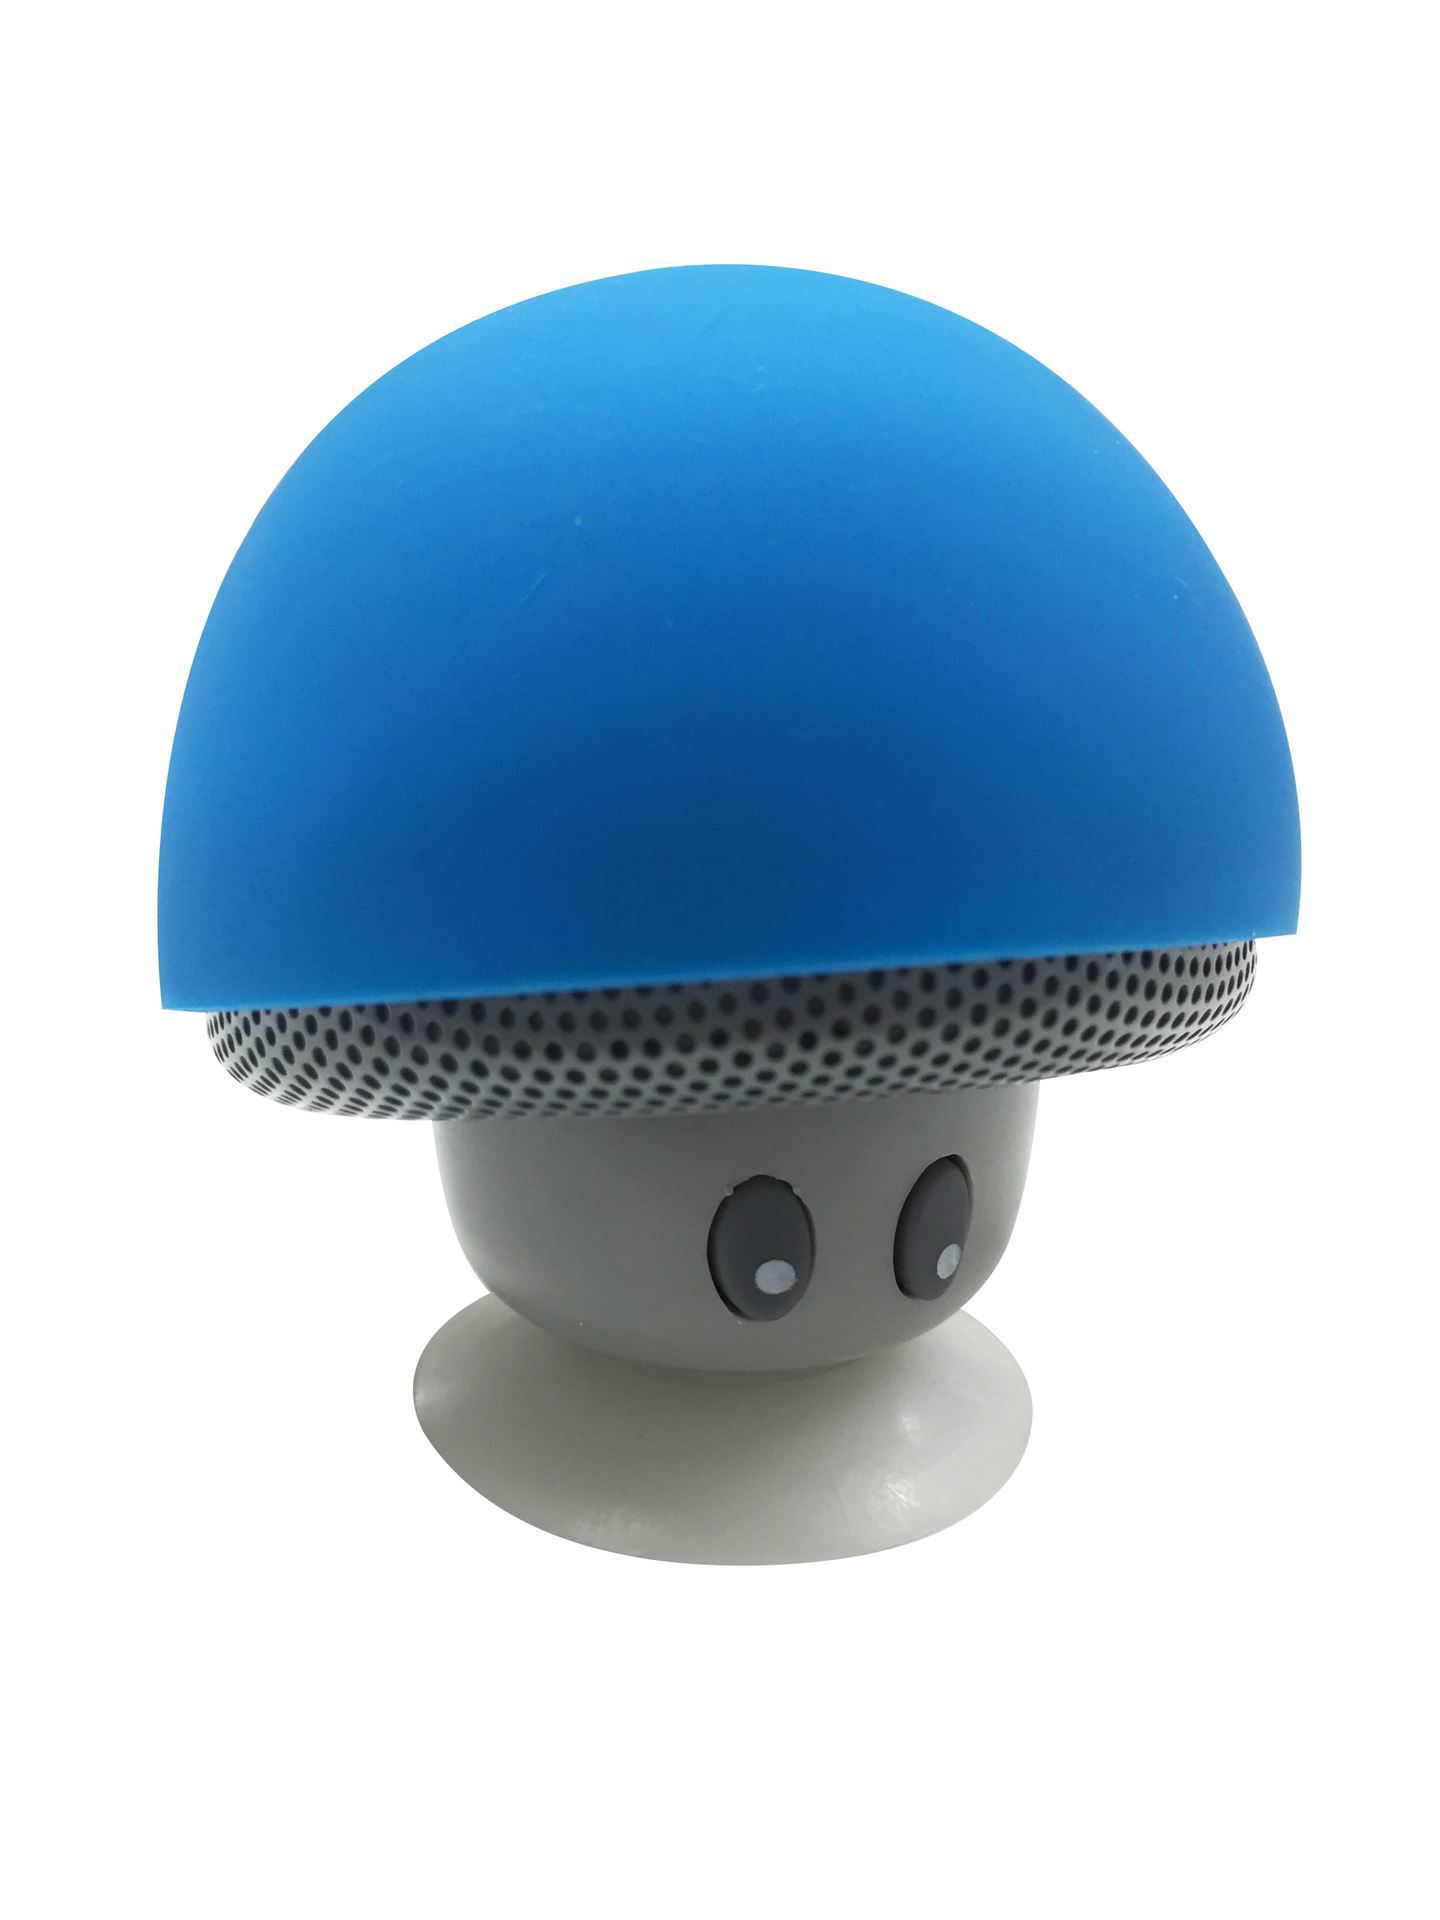 Mushroom Bluetooth Speaker Stand in blue and grey